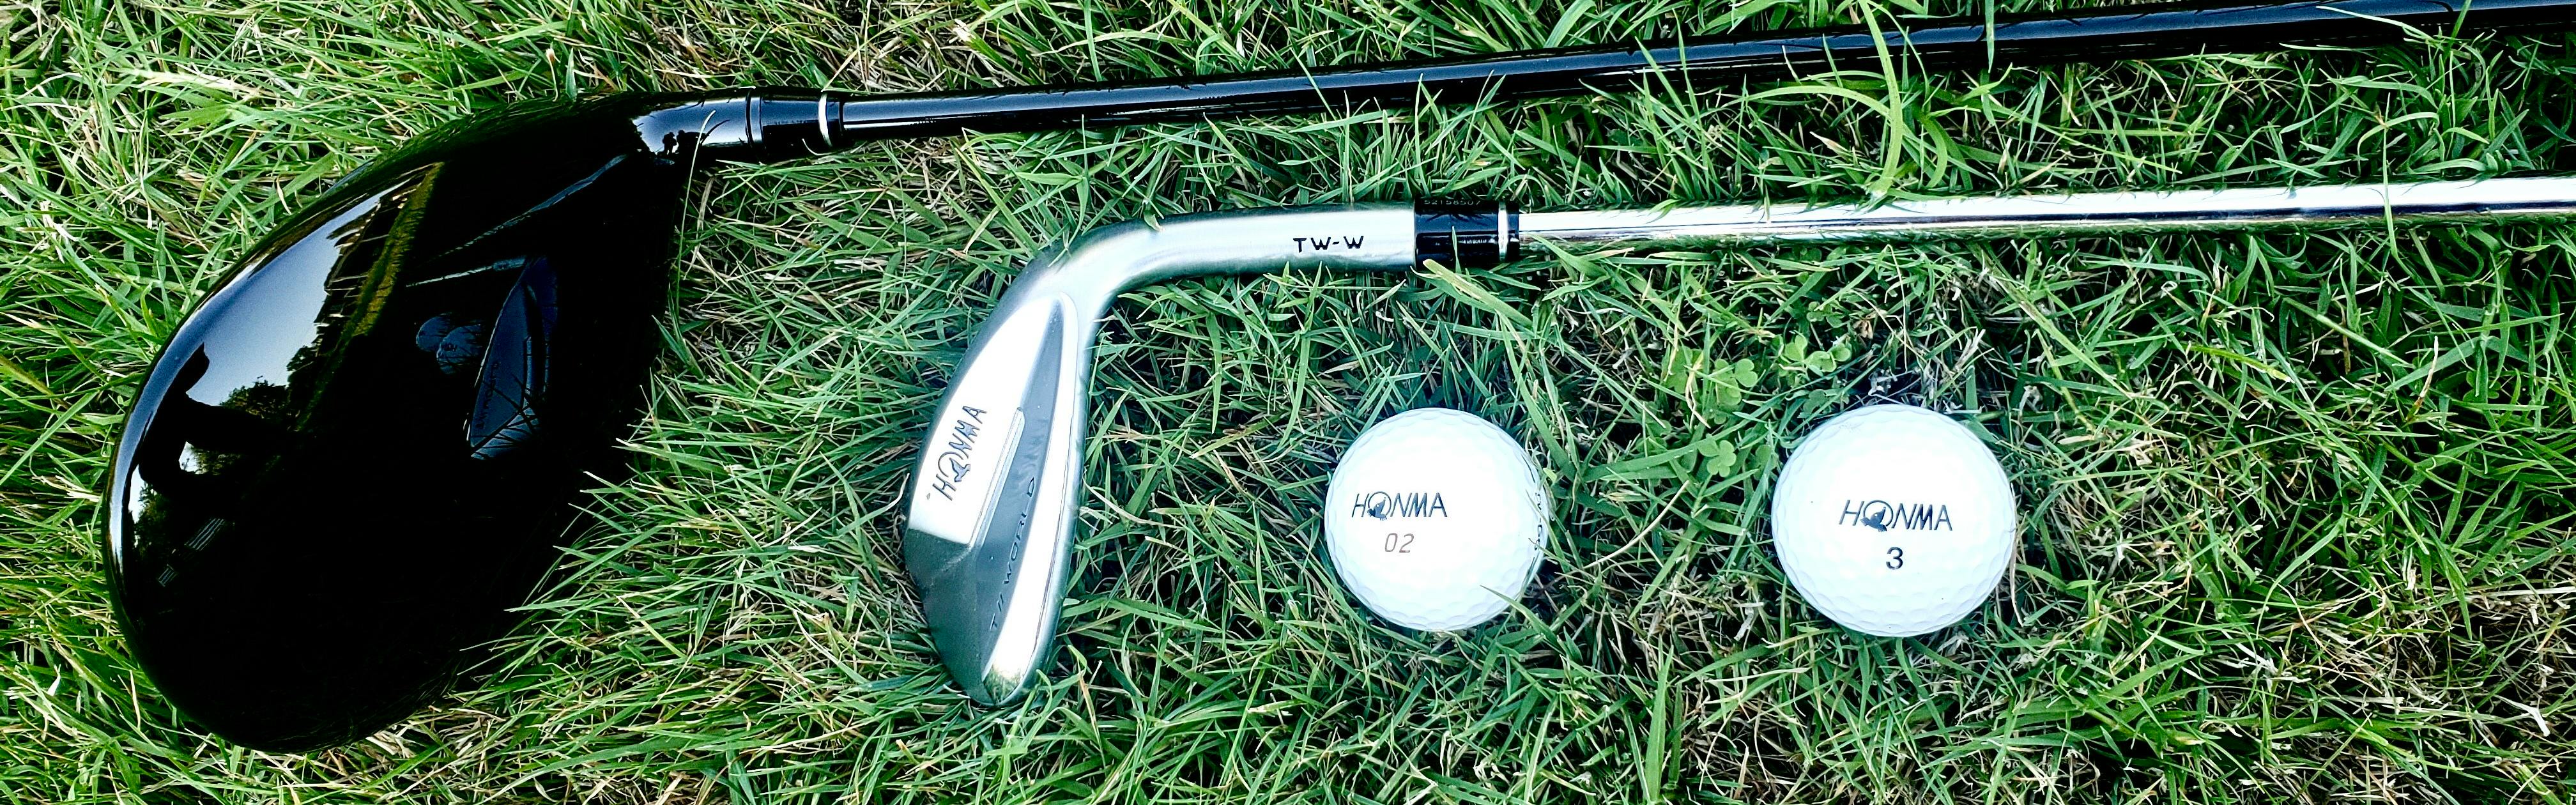 A black golf club and a silver golf club lie on the grass next to two Honma golf balls